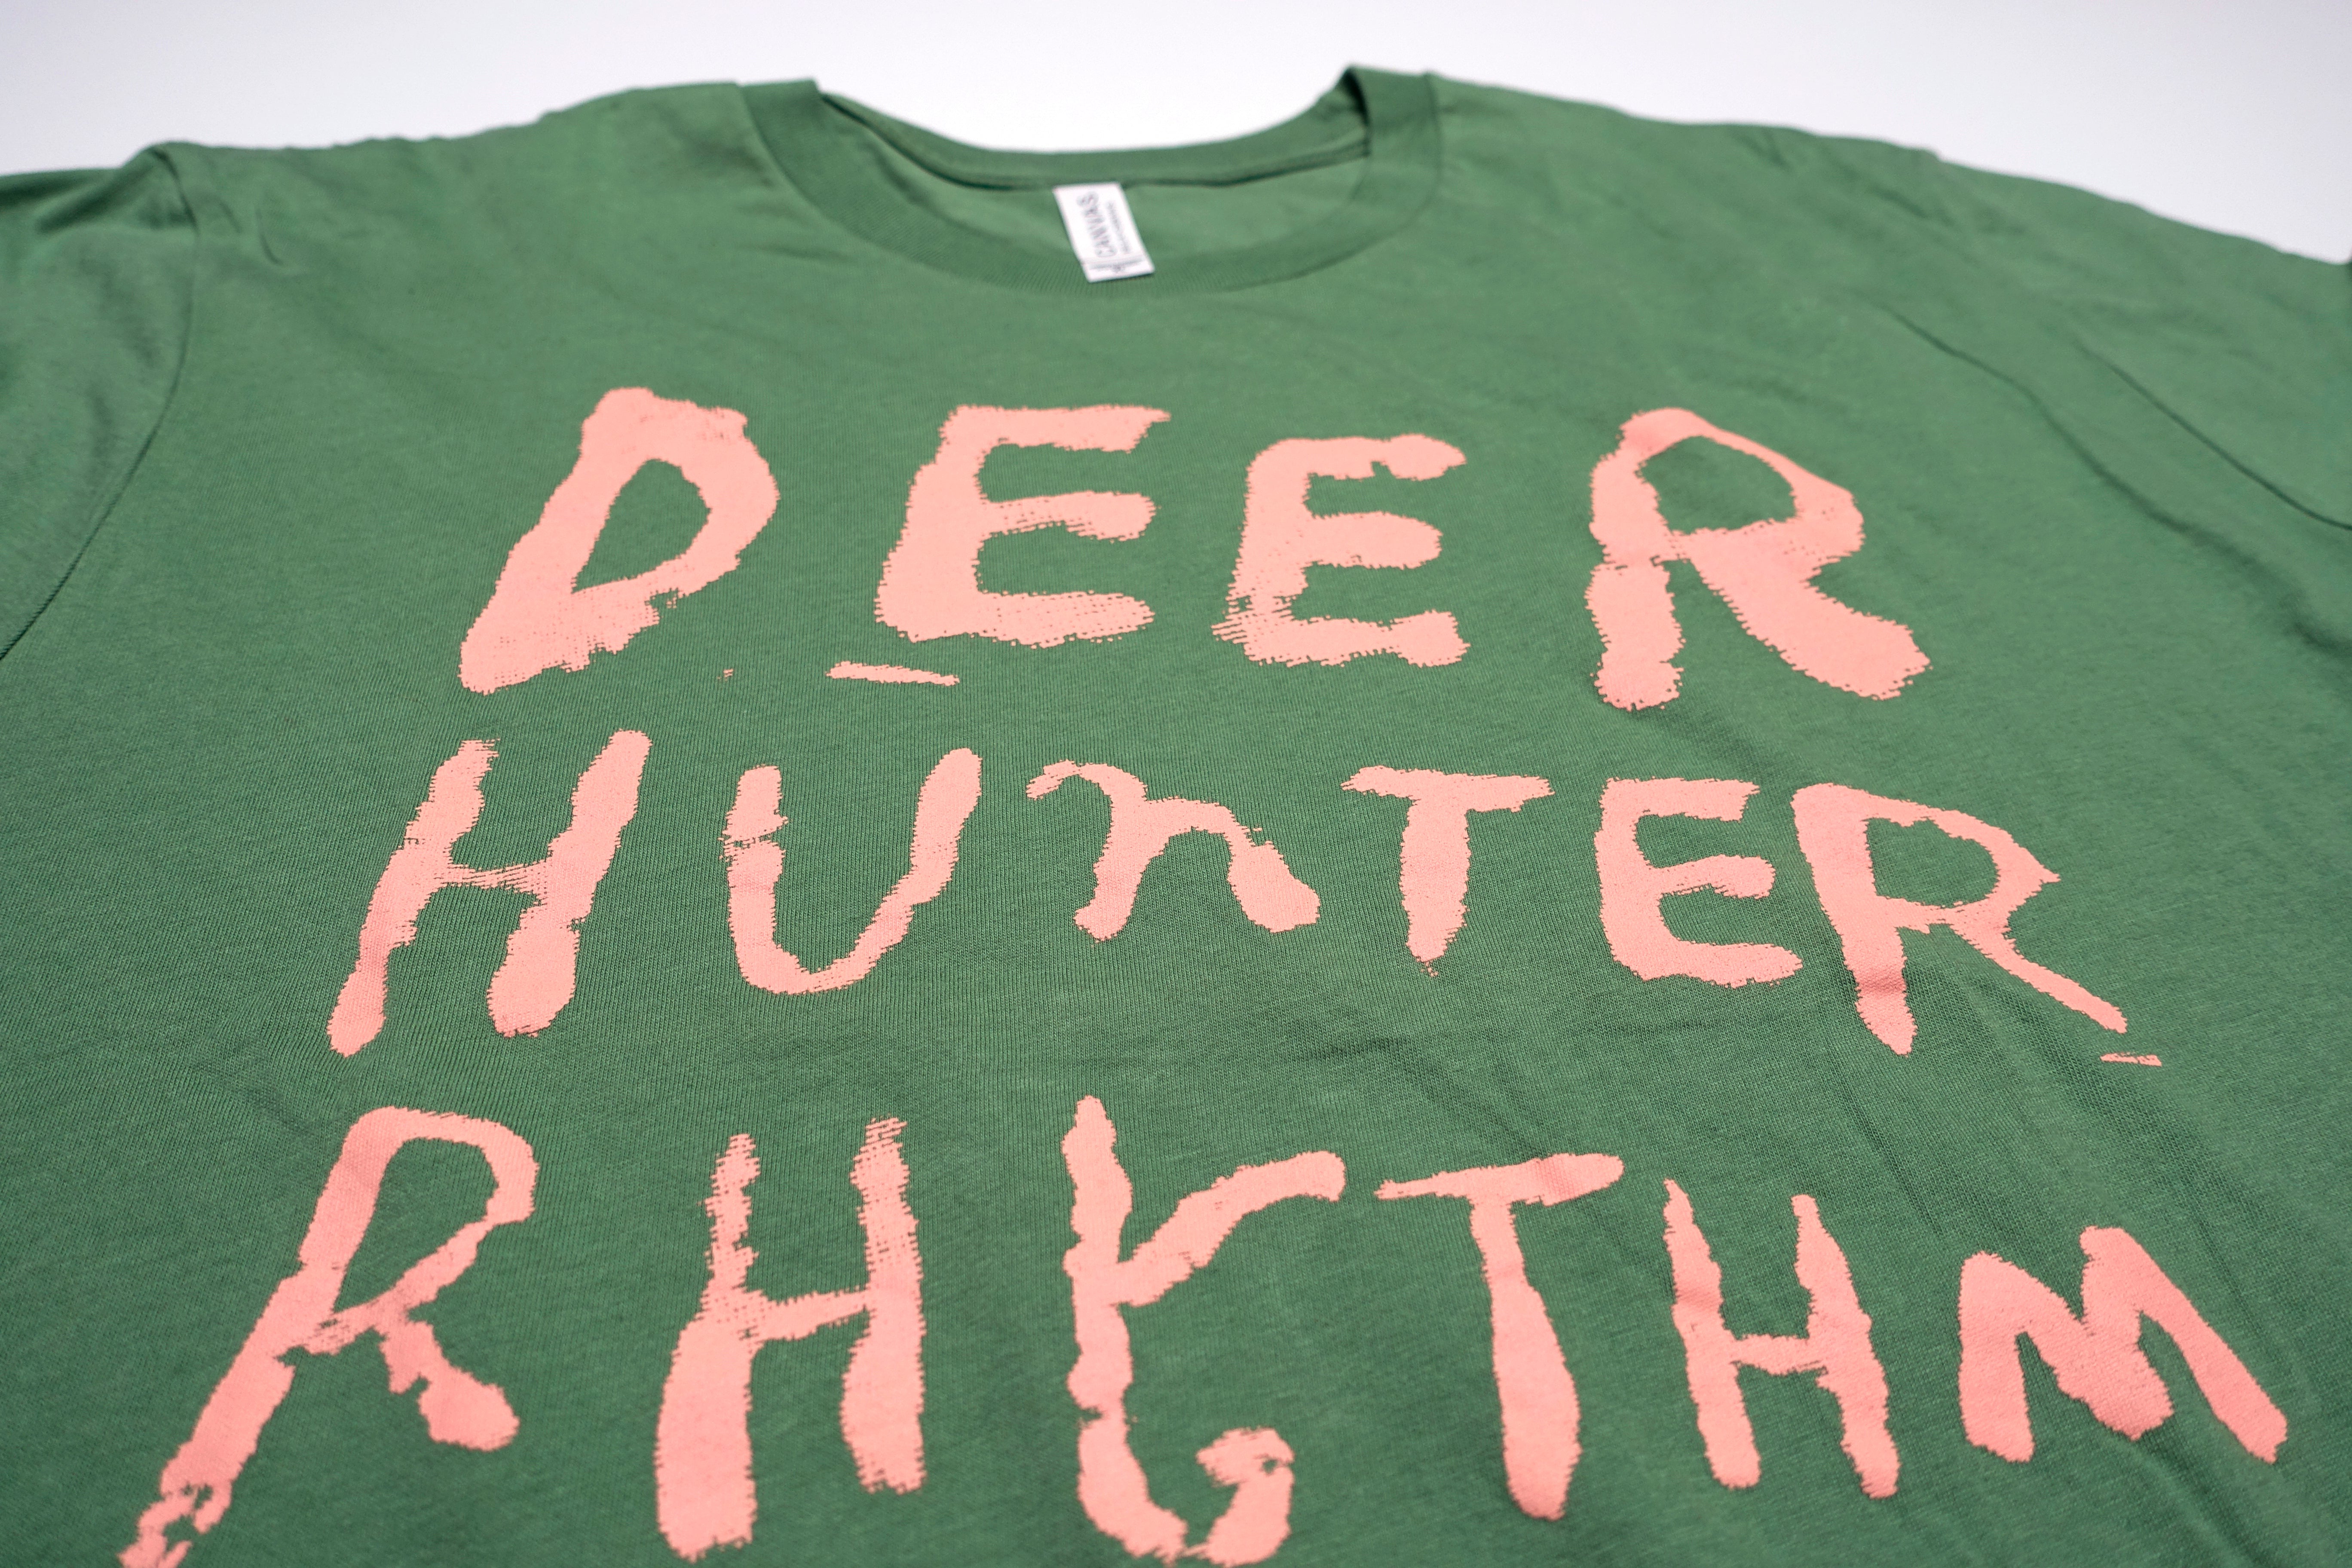 Deerhunter - Rhythm Group Of God Tour Shirt Size XL